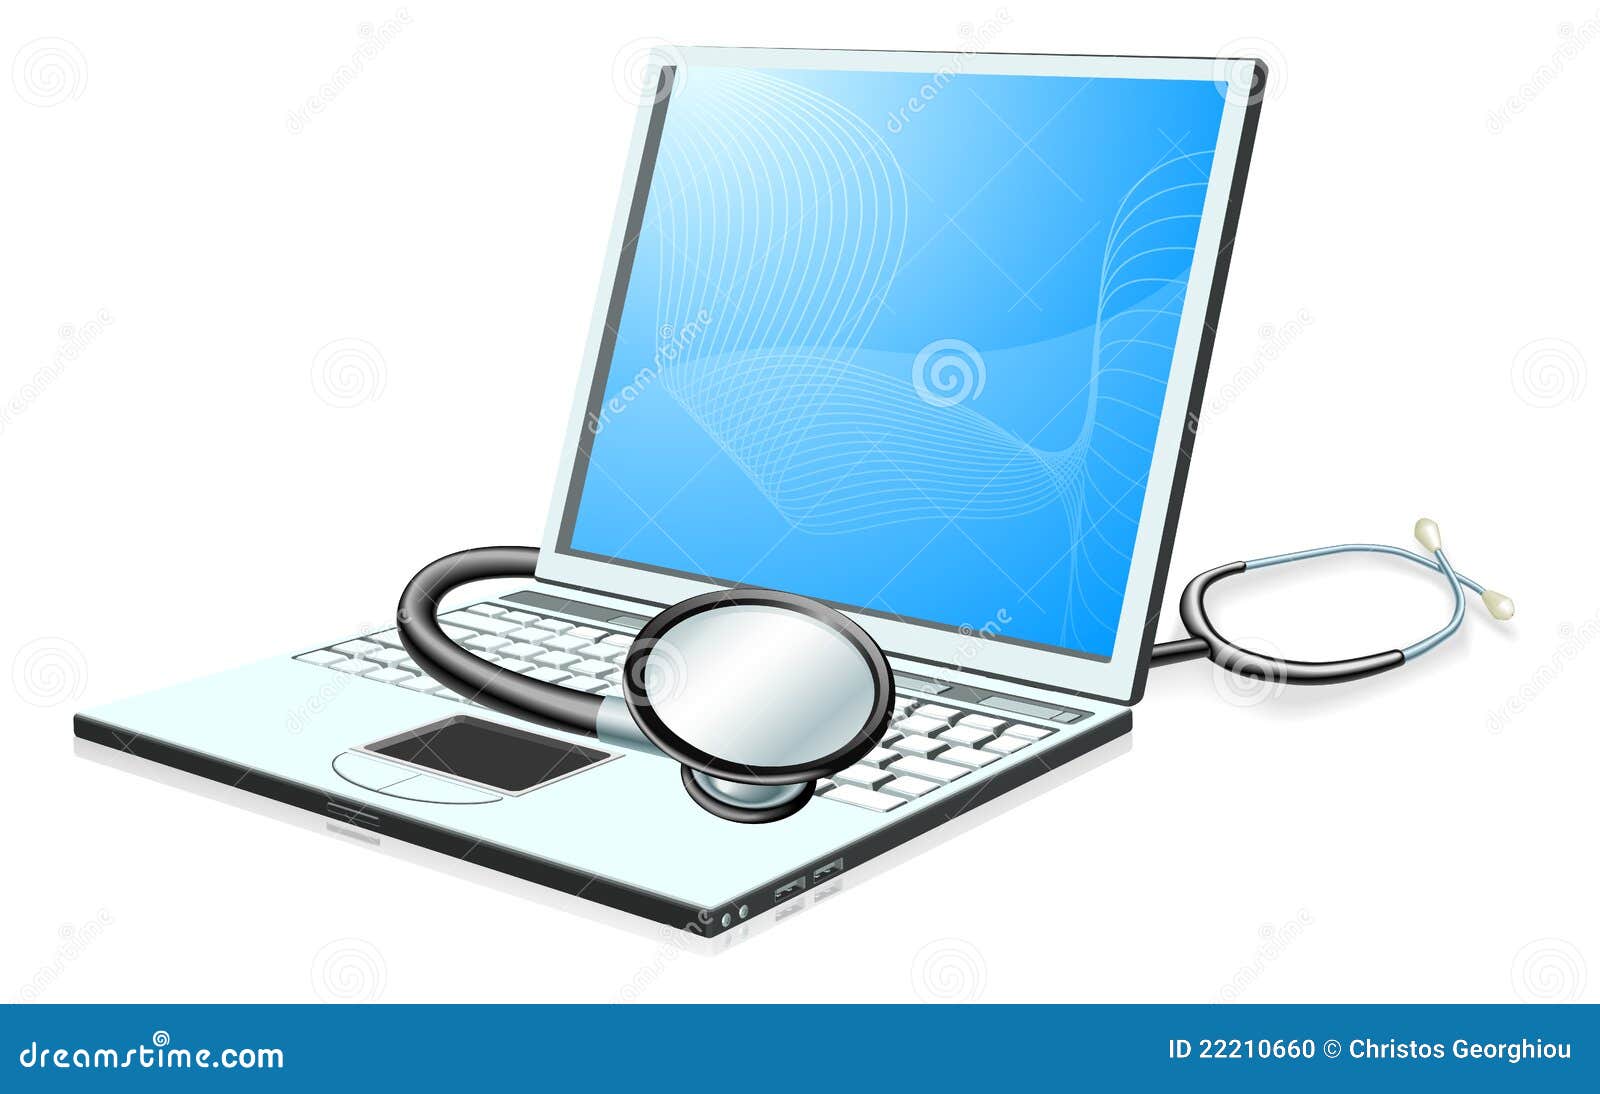 Laptop Pc Computer Health Check Concept Stock Photo ...